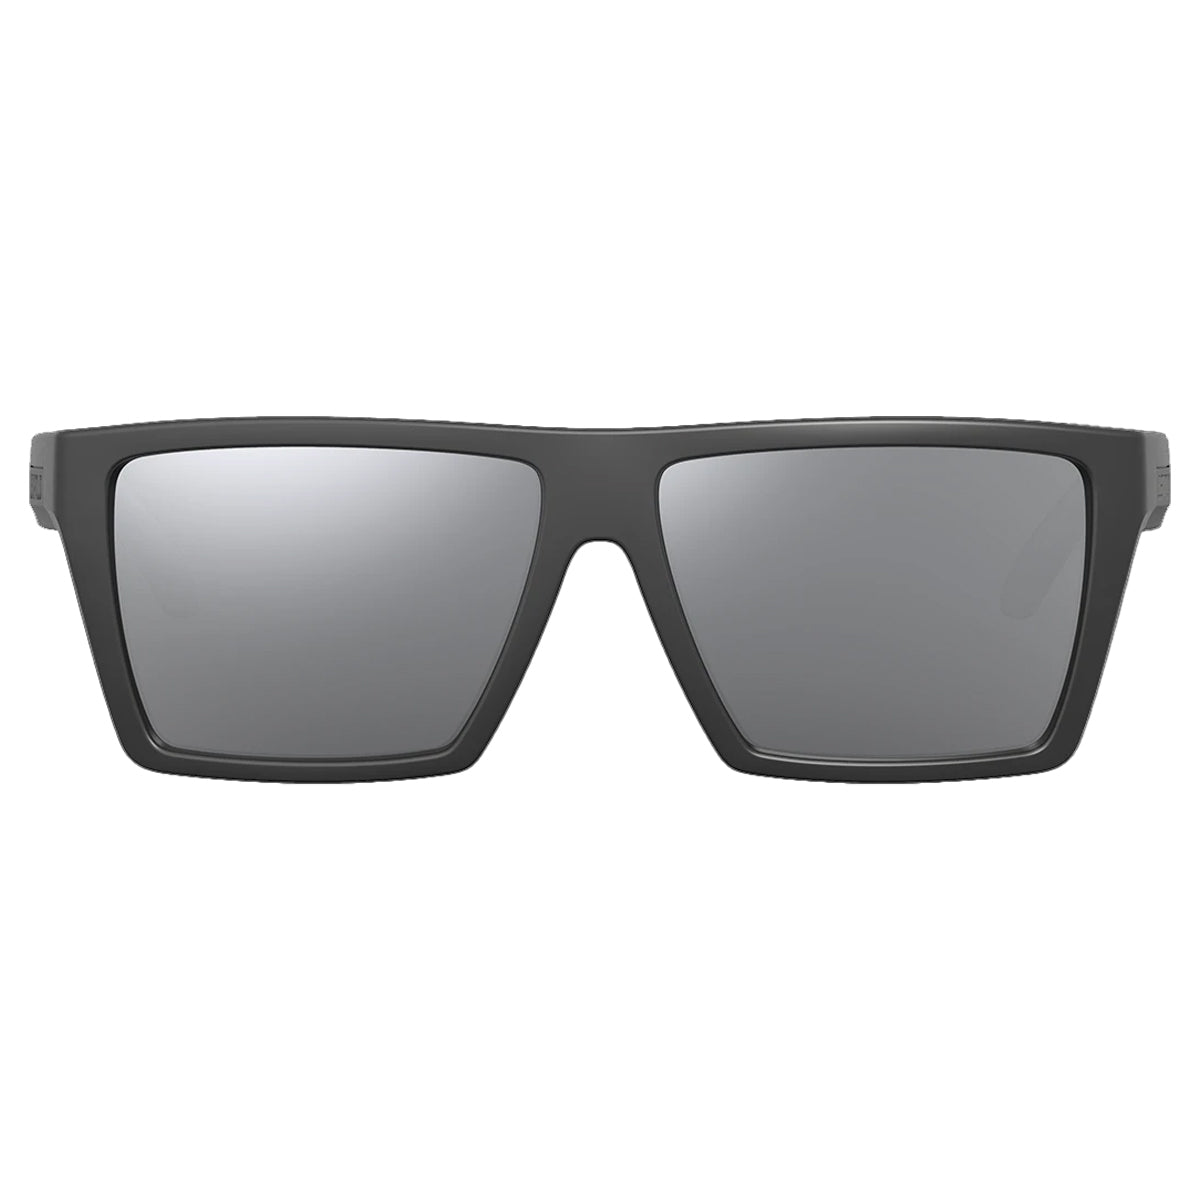 Leupold Packout Mens Sunglasses , Size: Regular w/ Free Shipping — 4 models